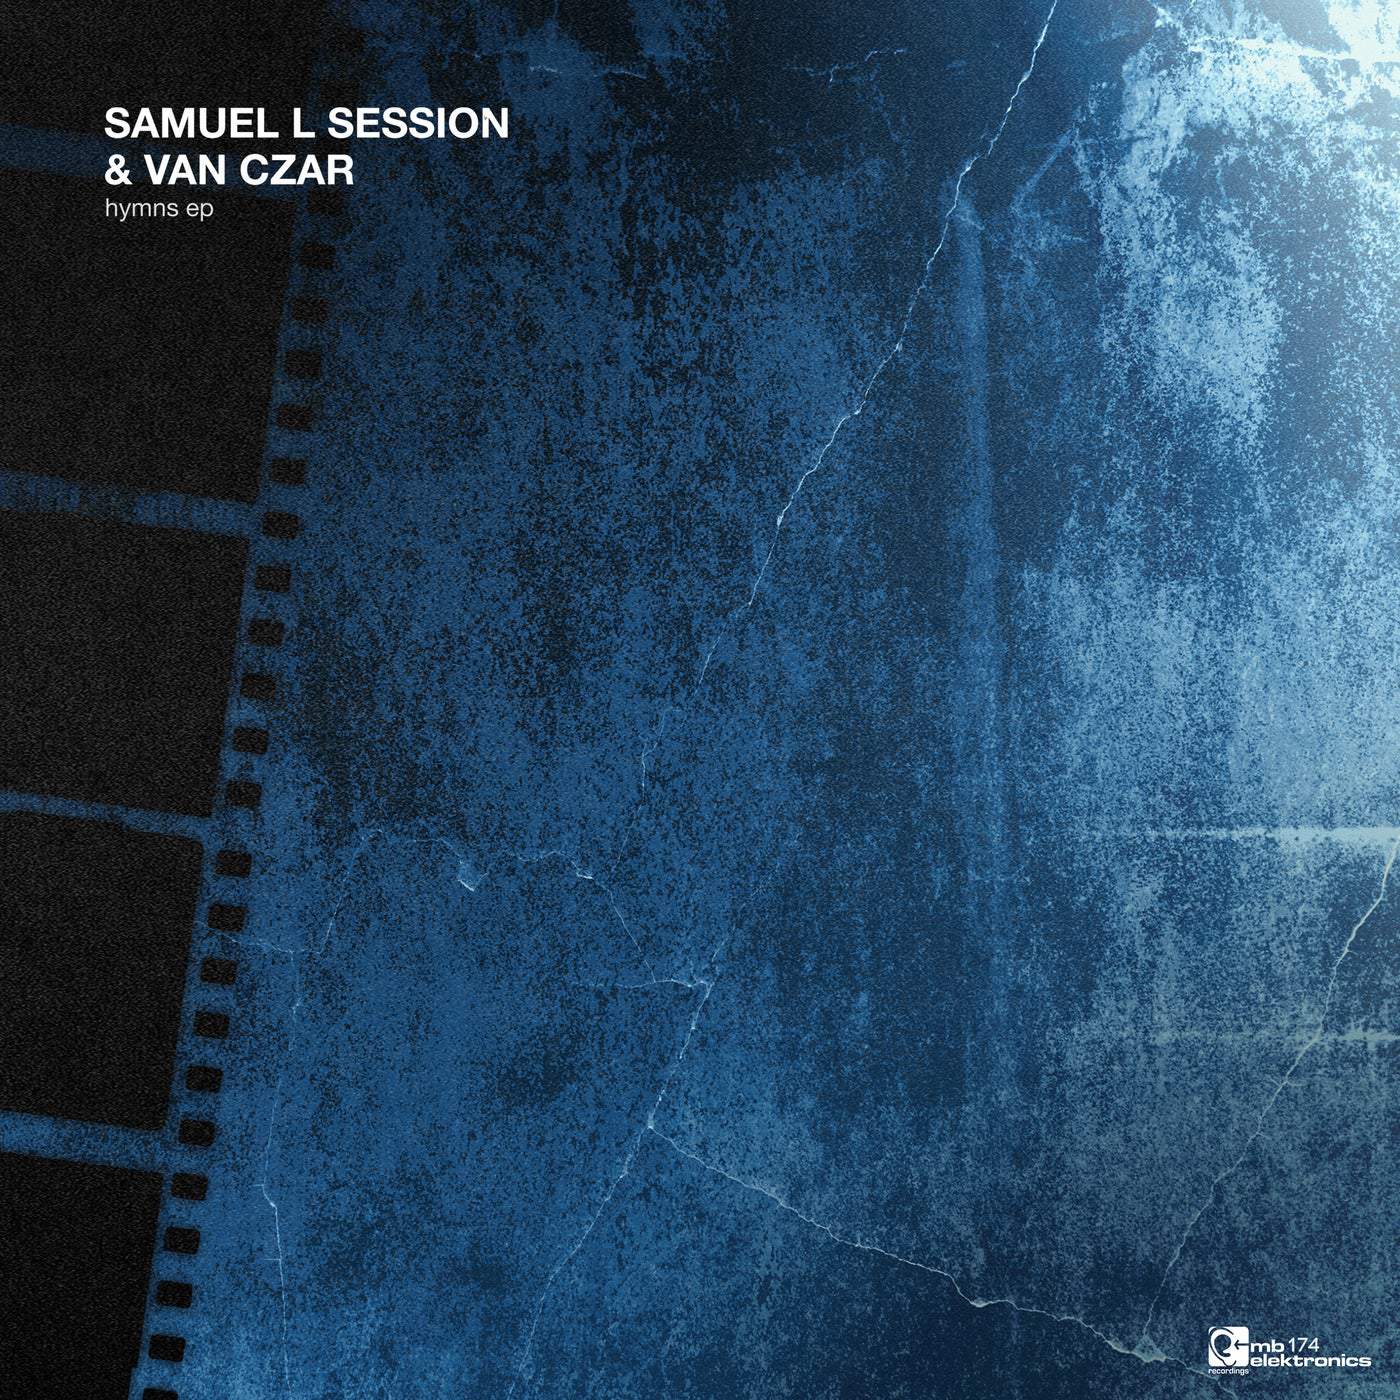 Download Samuel L Session, Van Czar - Hymns EP on Electrobuzz